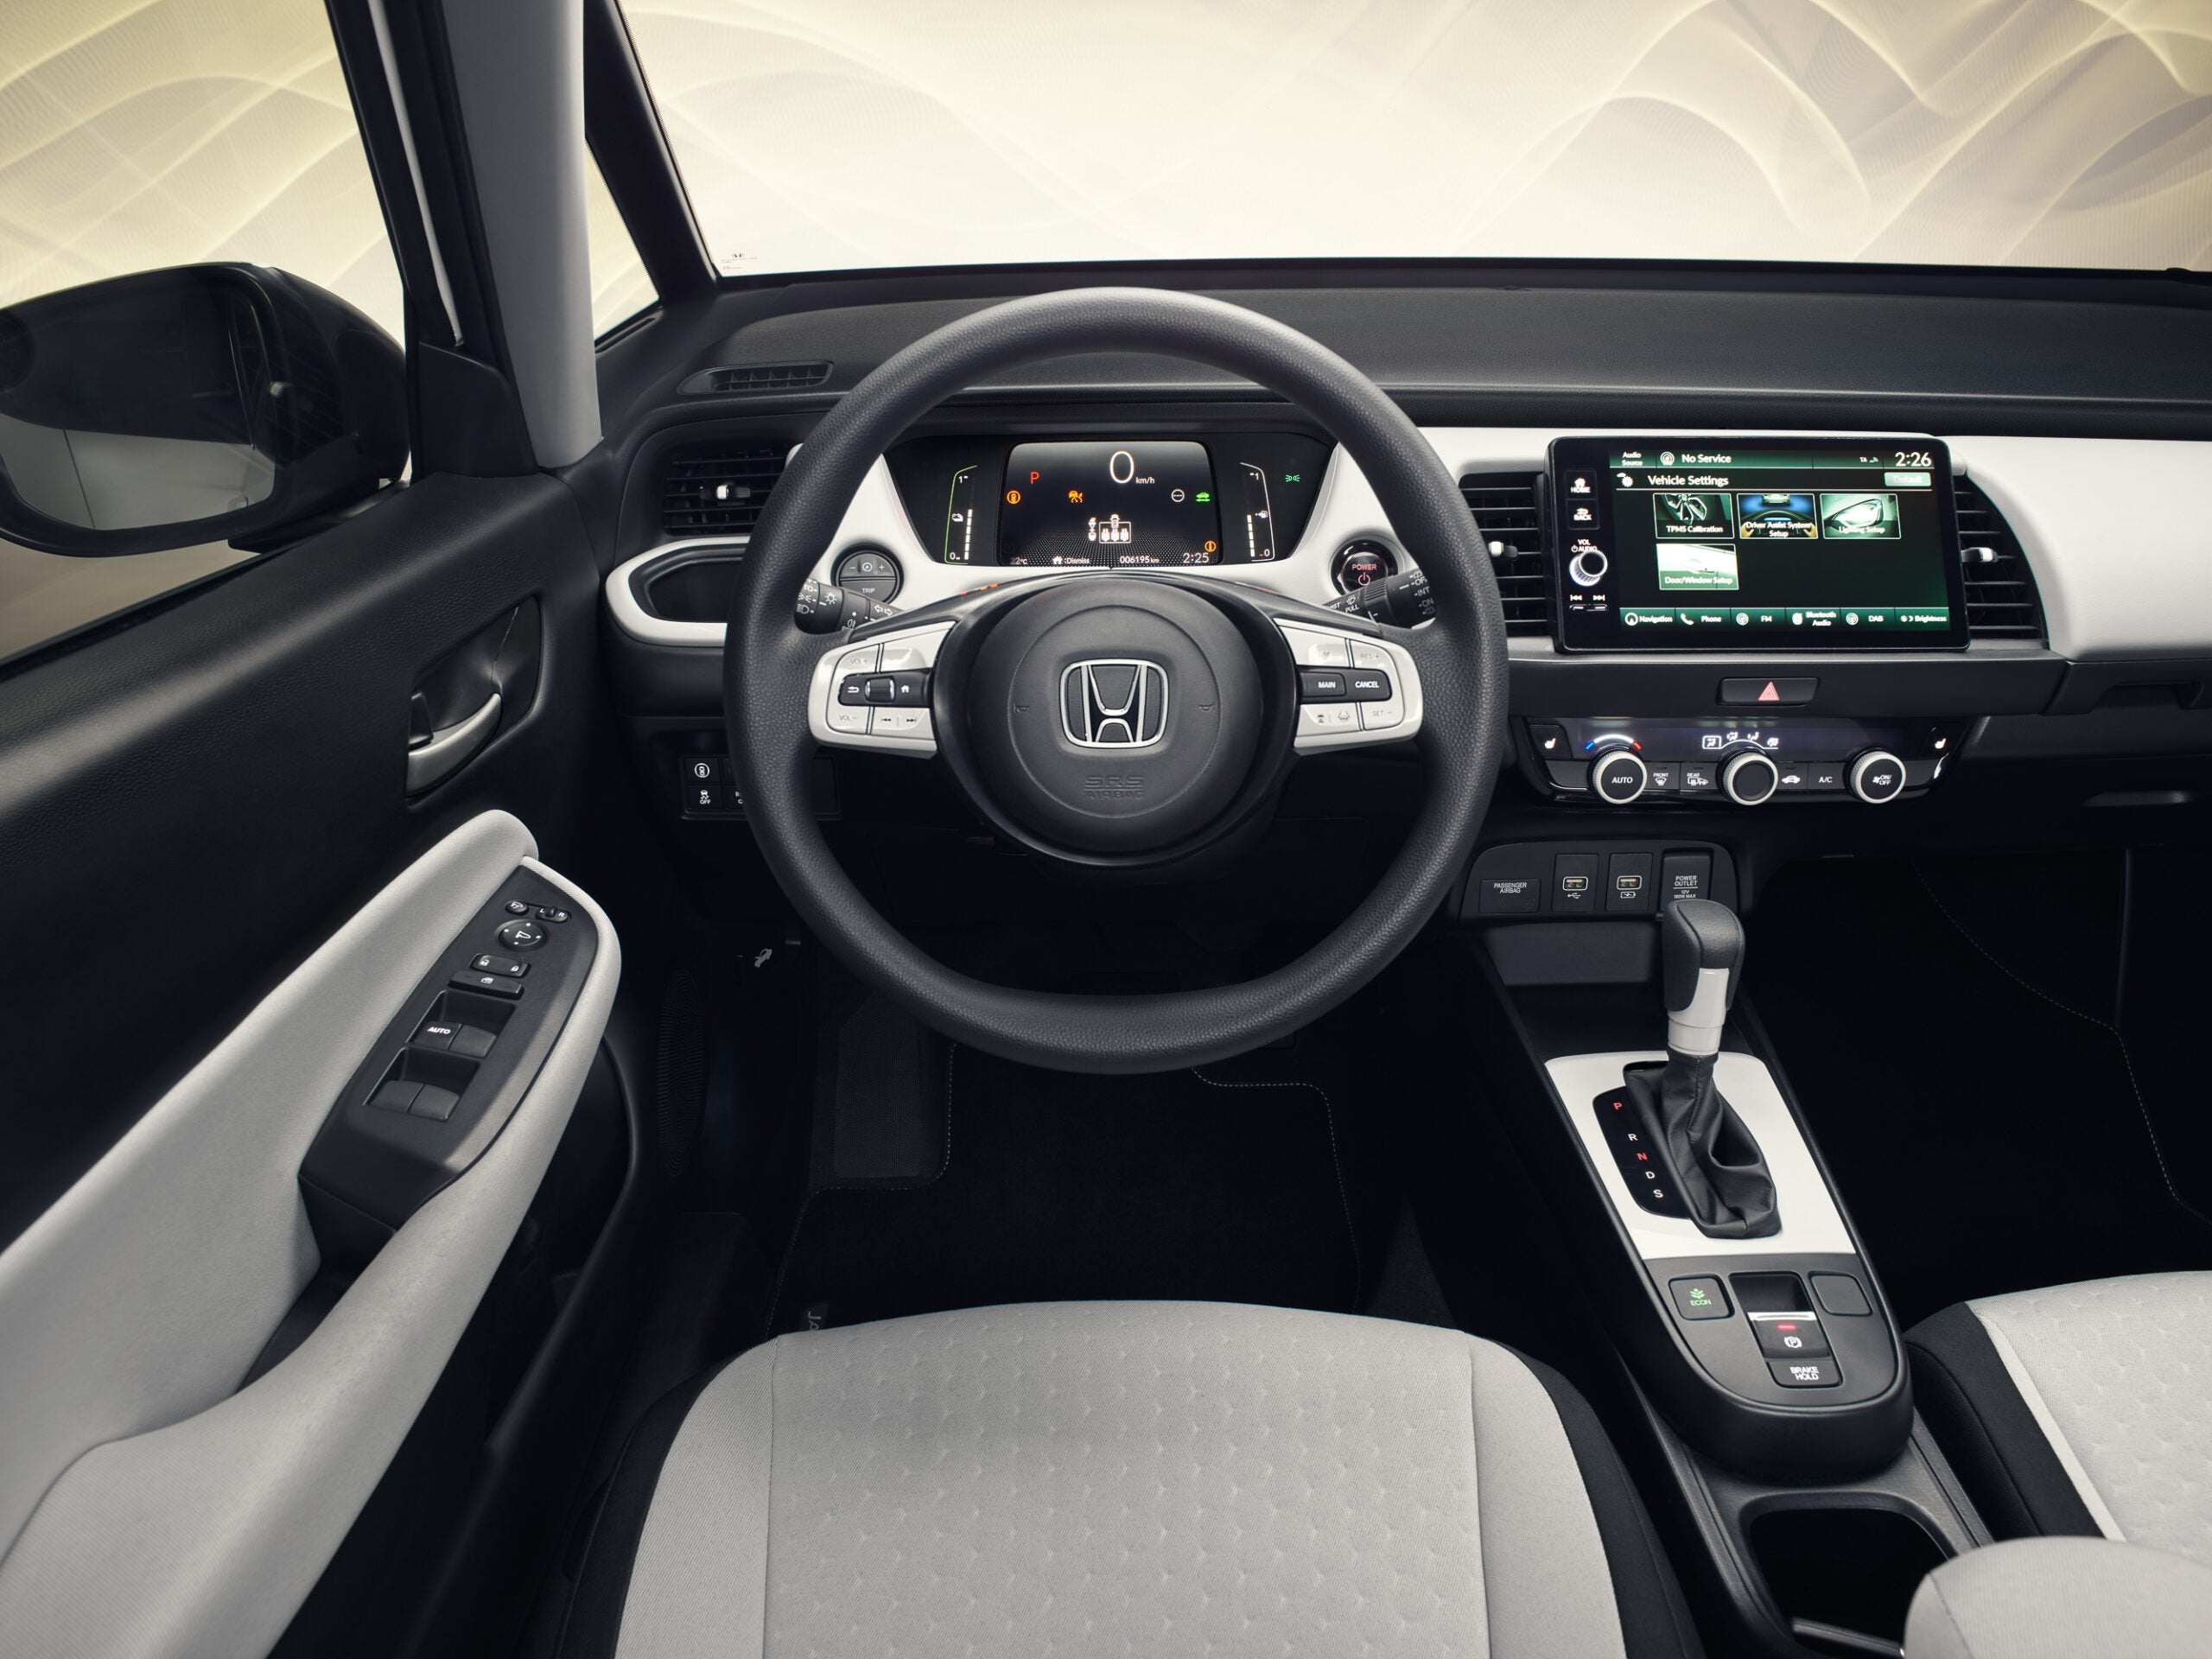 Interior design and technology – Honda Jazz - Just Auto